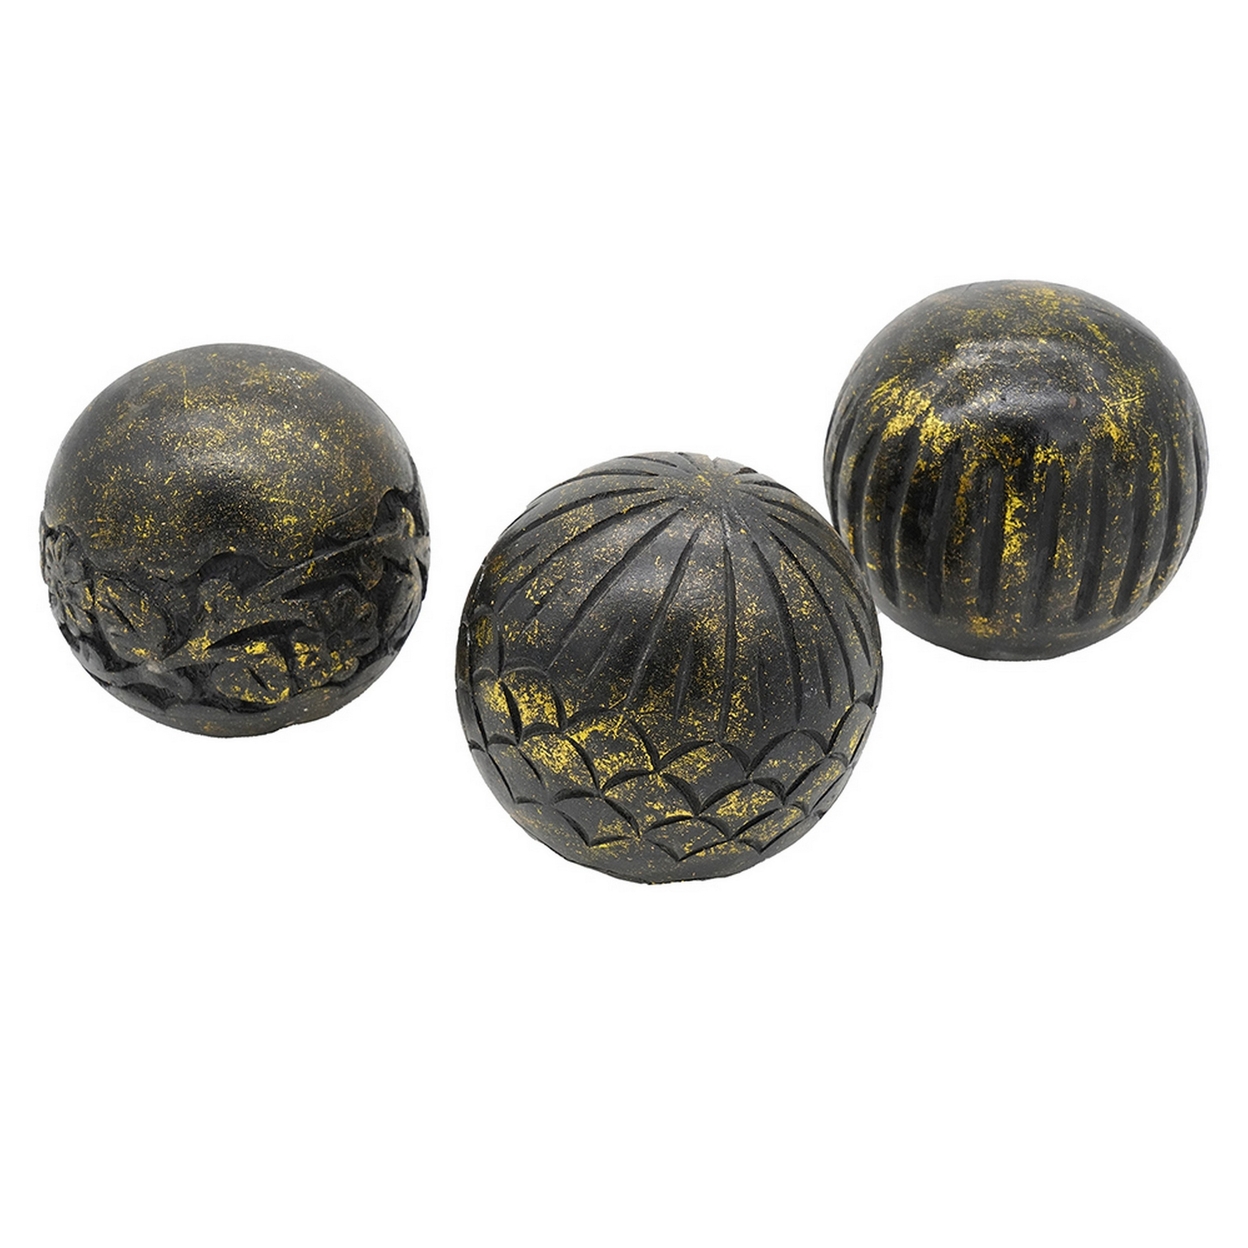 Set Of 3 Decorative Tabletop Round Balls, Carved Mango Wood, Black, Yellow- Saltoro Sherpi